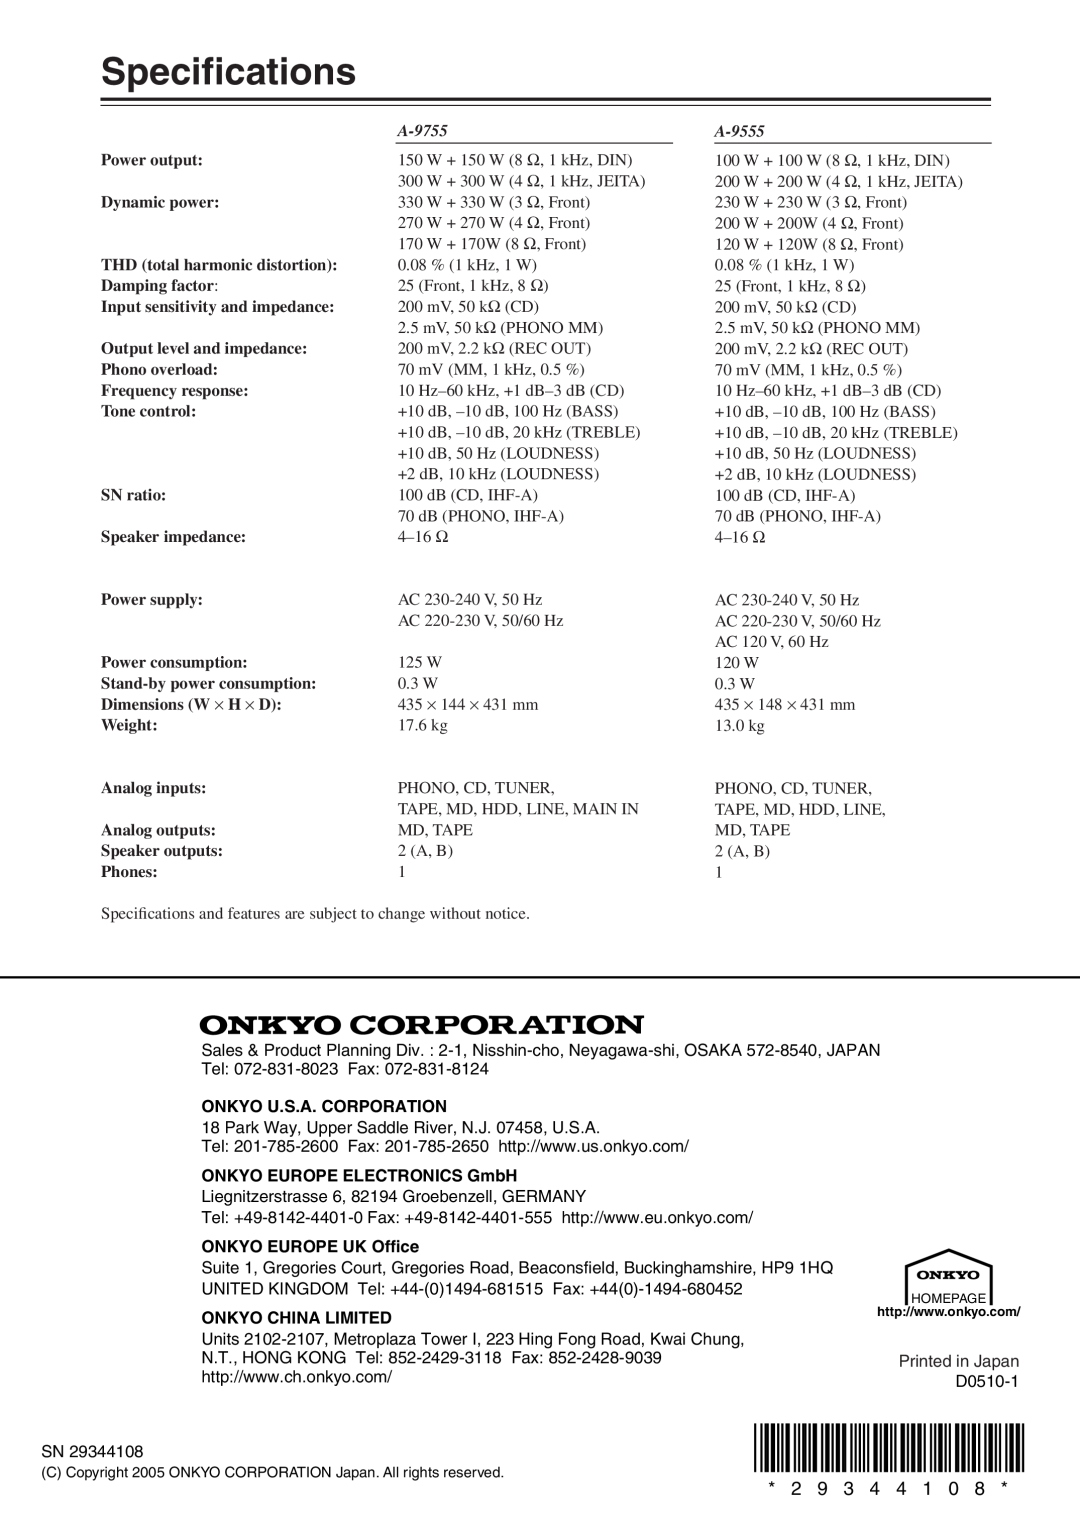 Onkyo Speciﬁcations, A-9755, A-9555, Onkyo U.S.A. Corporation, ONKYO EUROPE ELECTRONICS GmbH, ONKYO EUROPE UK Office 